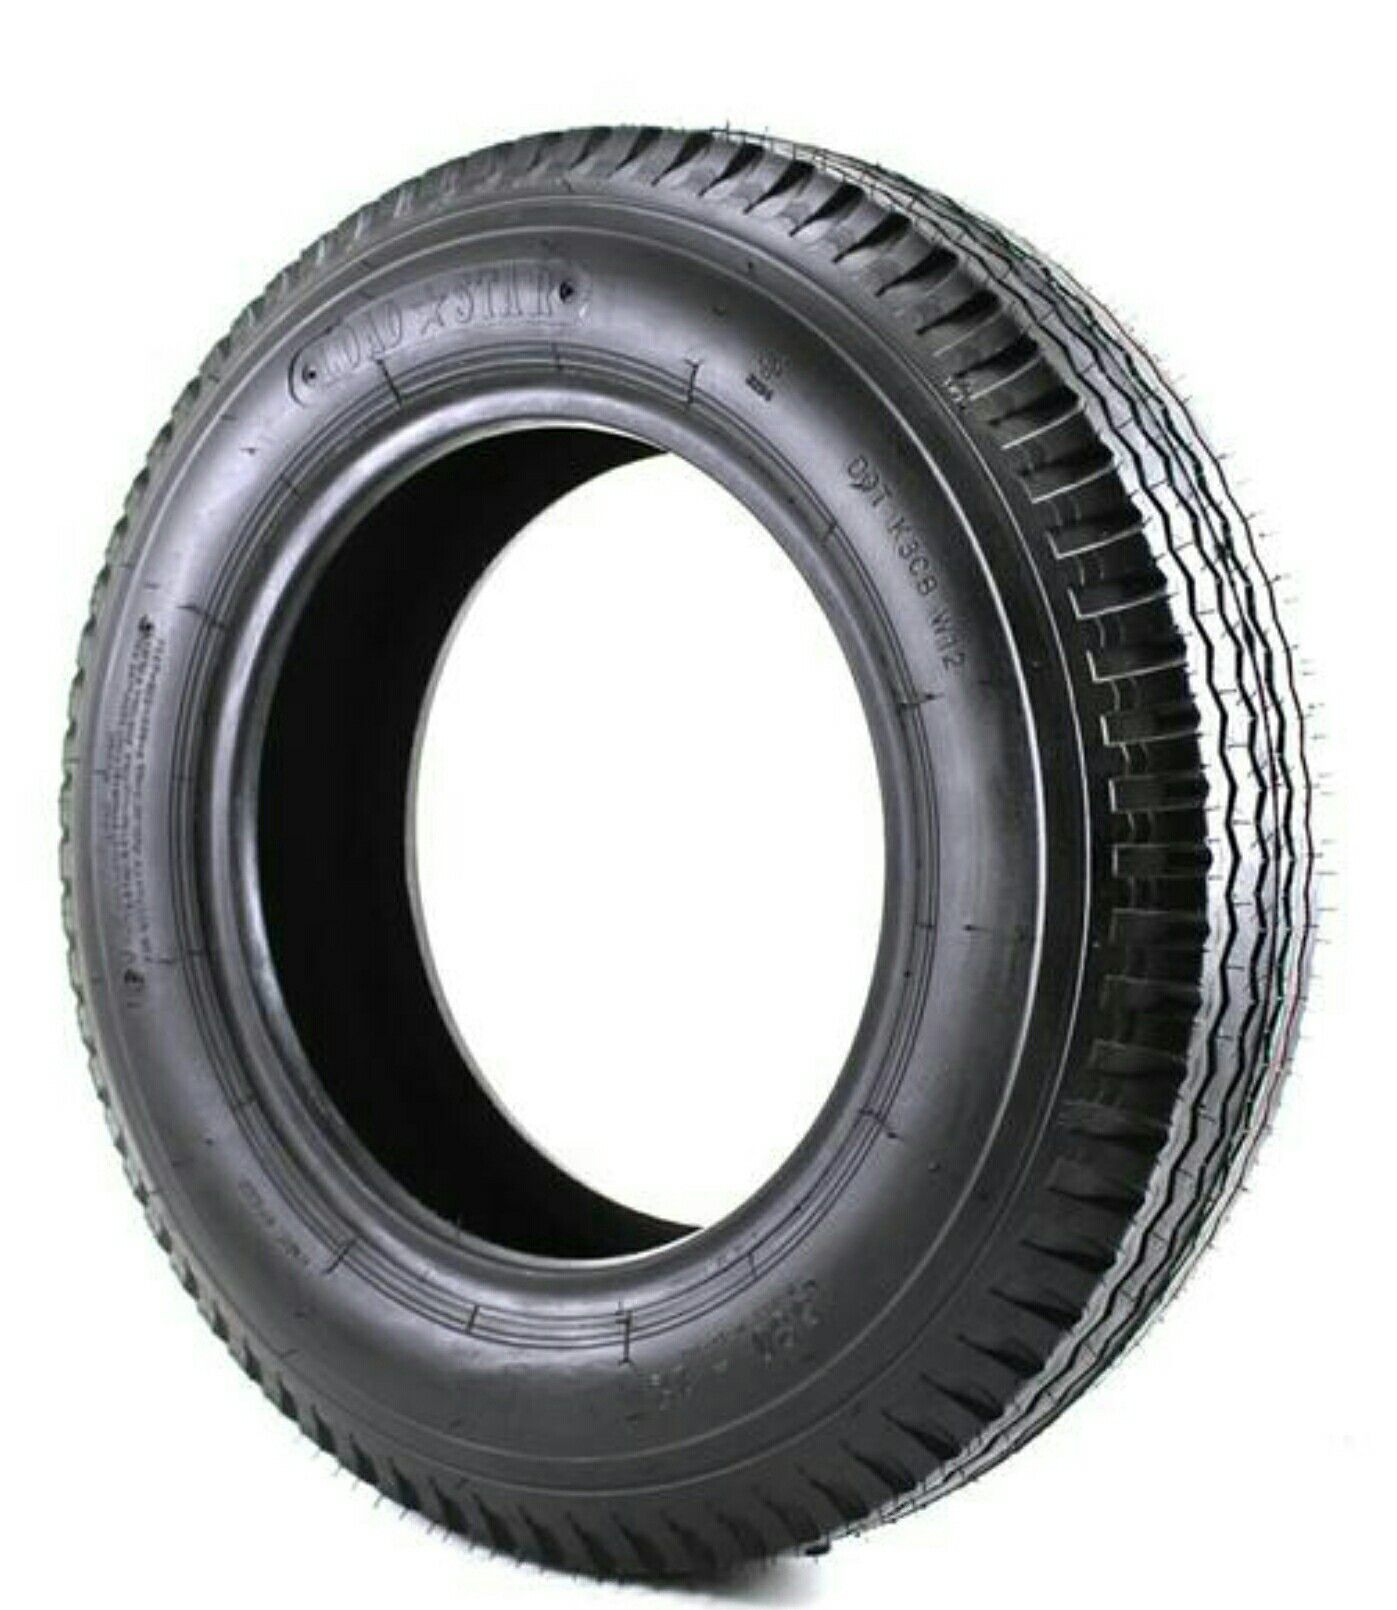 Brand new LOADSTAR 5.30 x 12" Trailer Tire, Load Range C